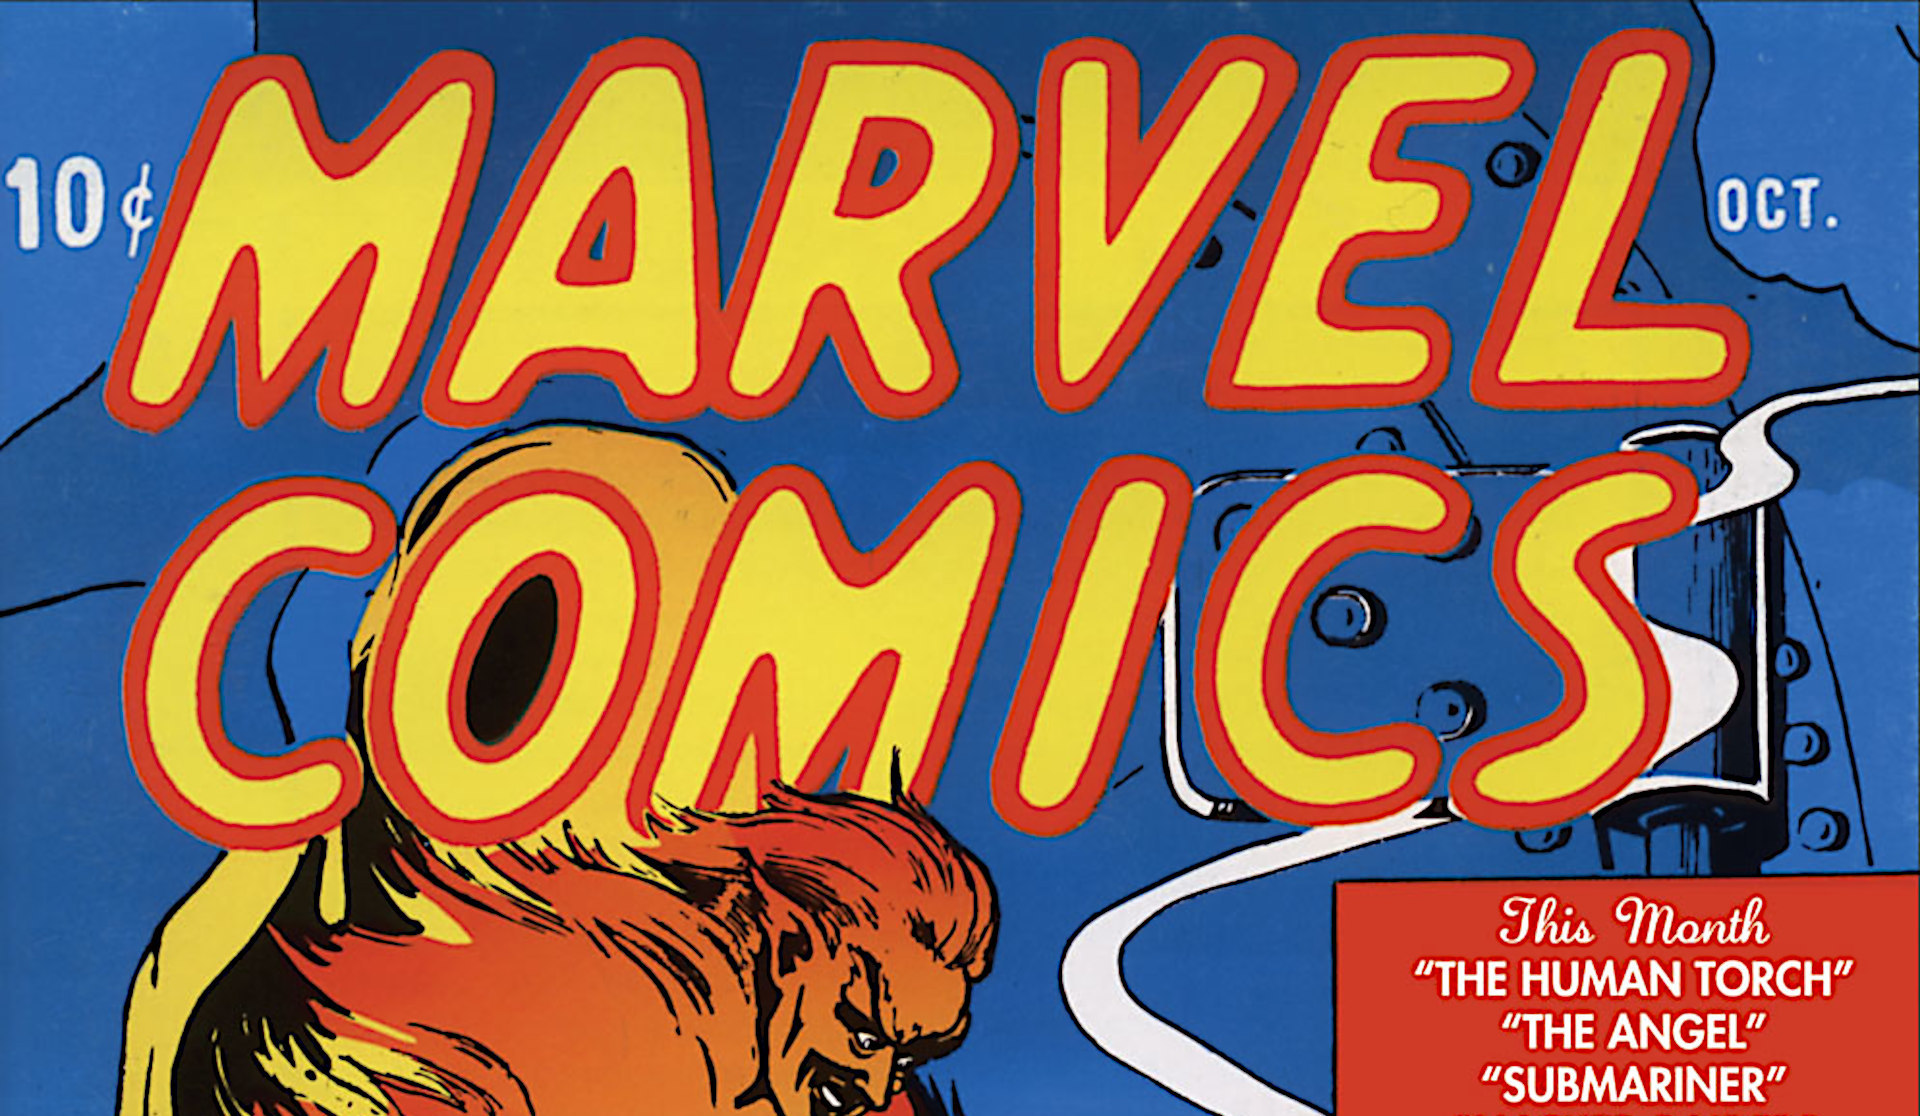 31 agosto 1939 Marvel Comics #1